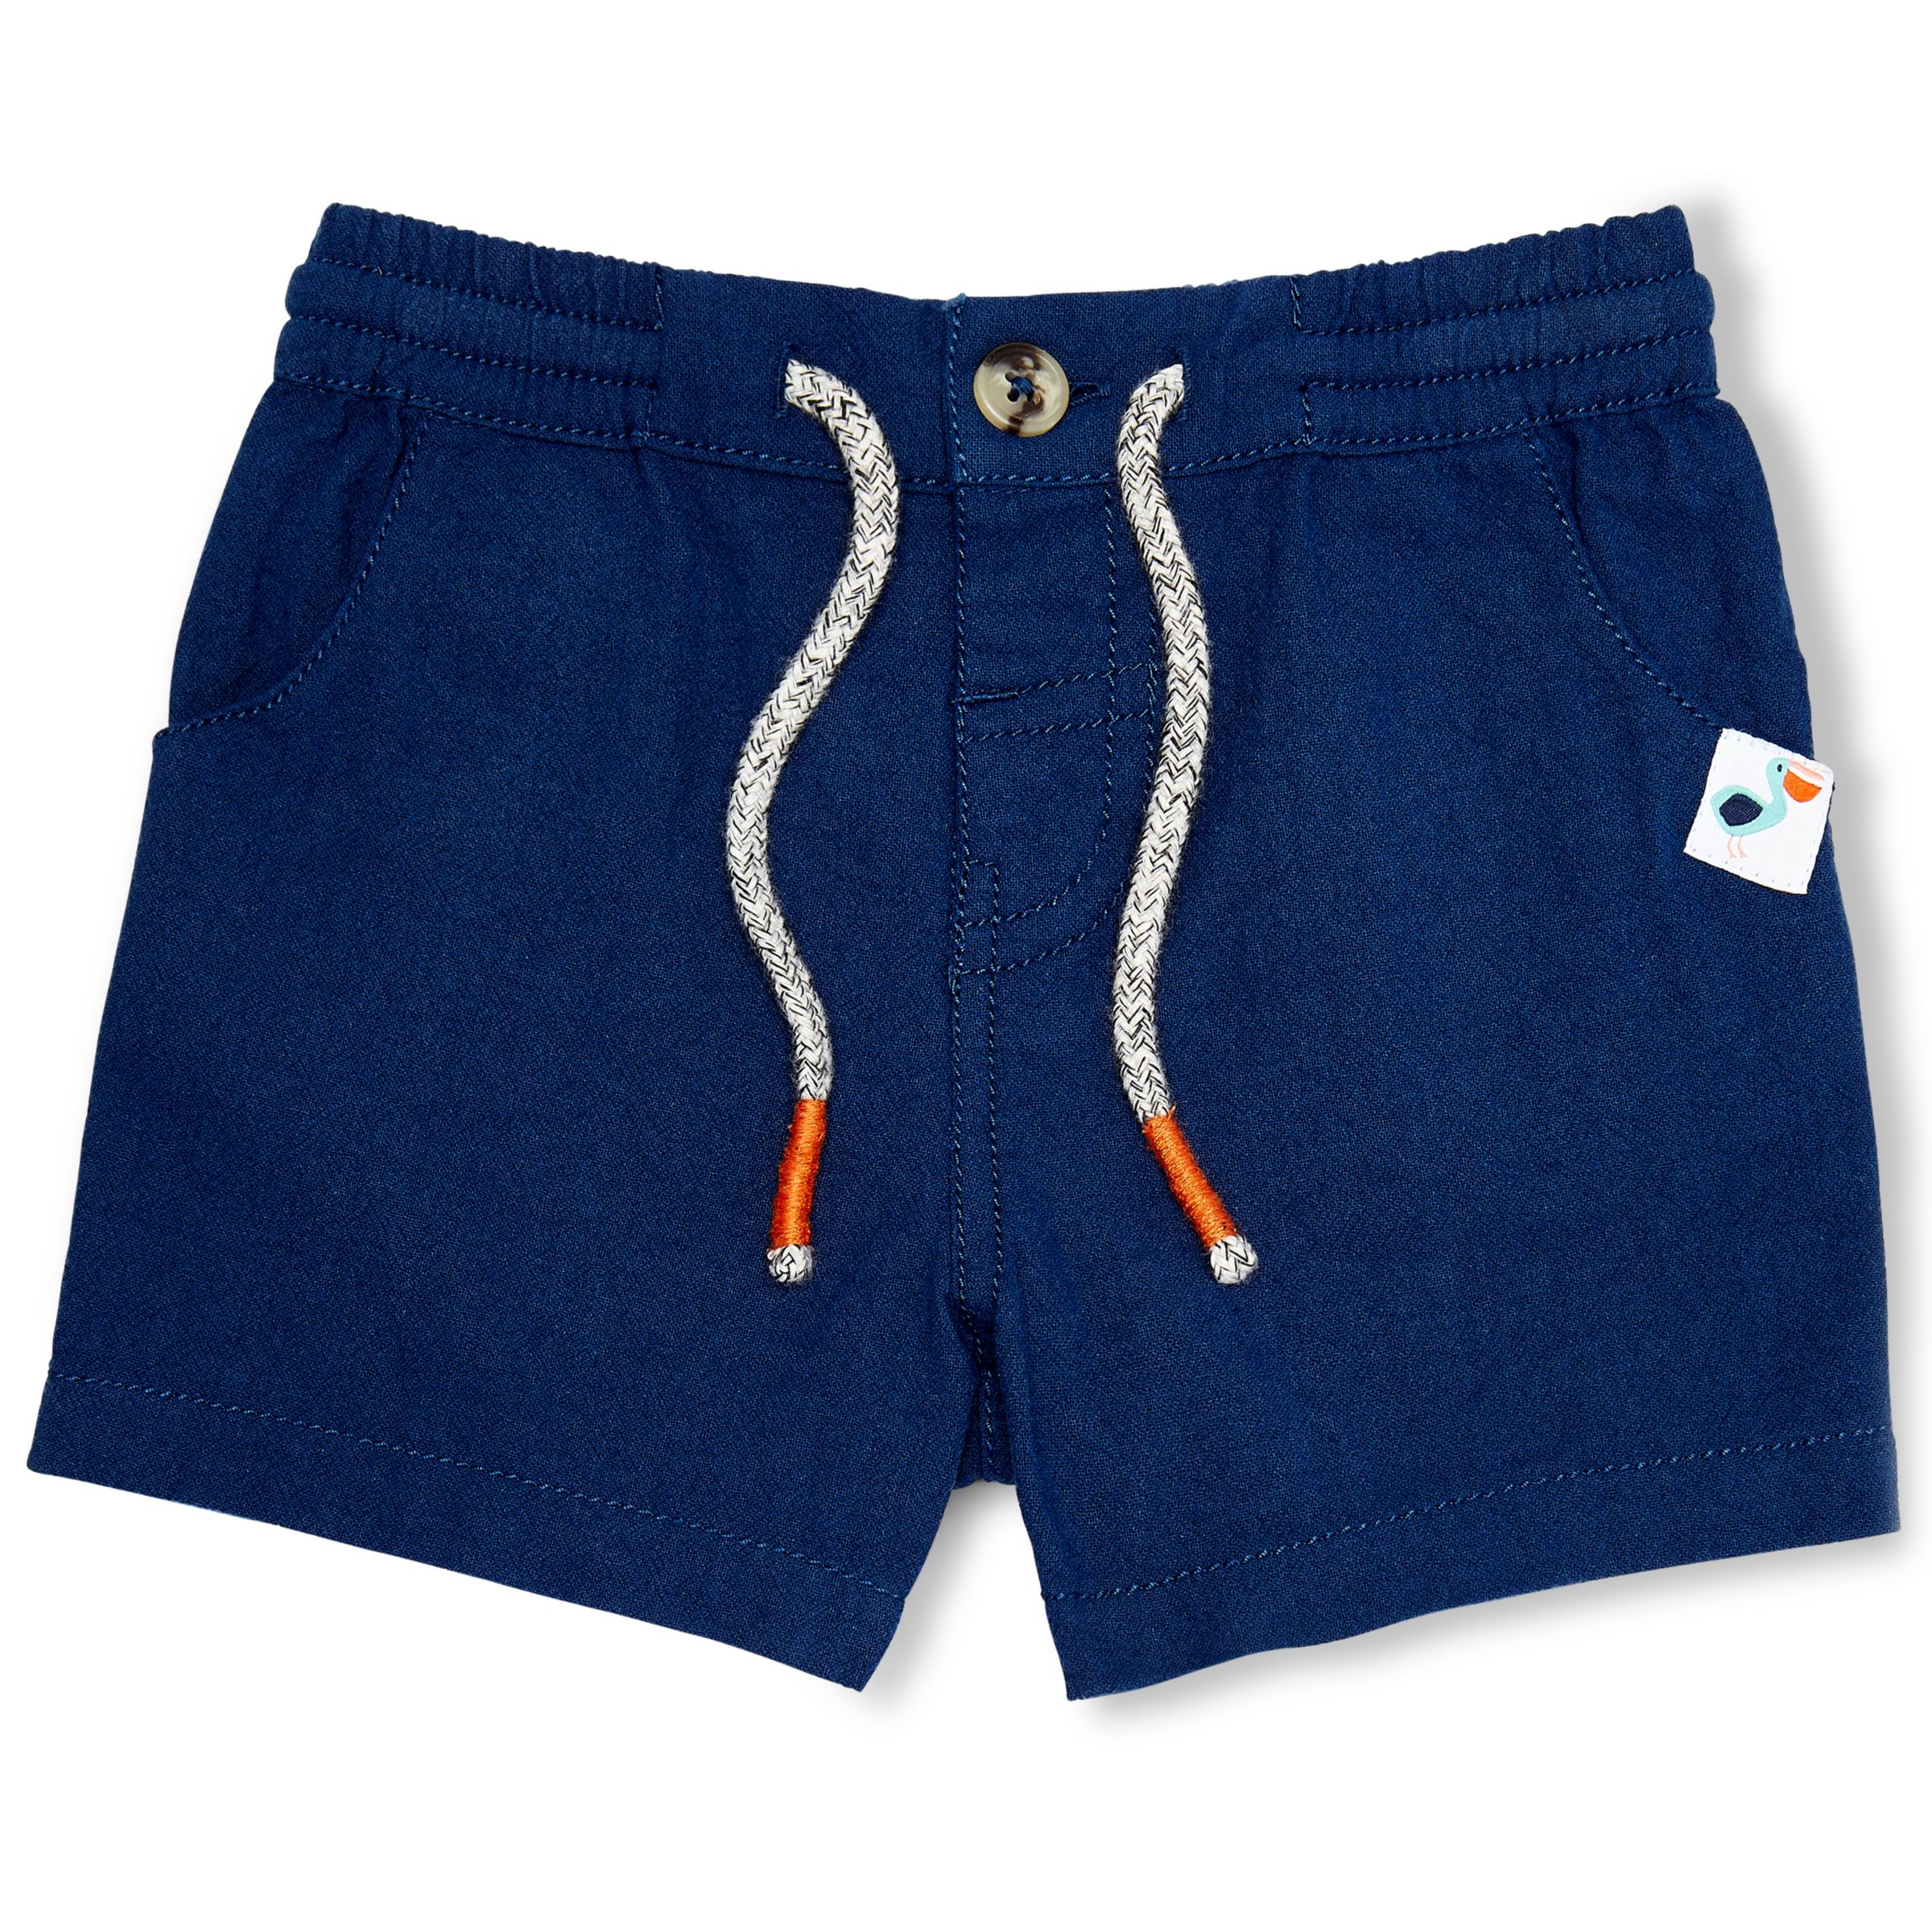 John Lewis & Partners Baby Crinkle Shorts, Navy